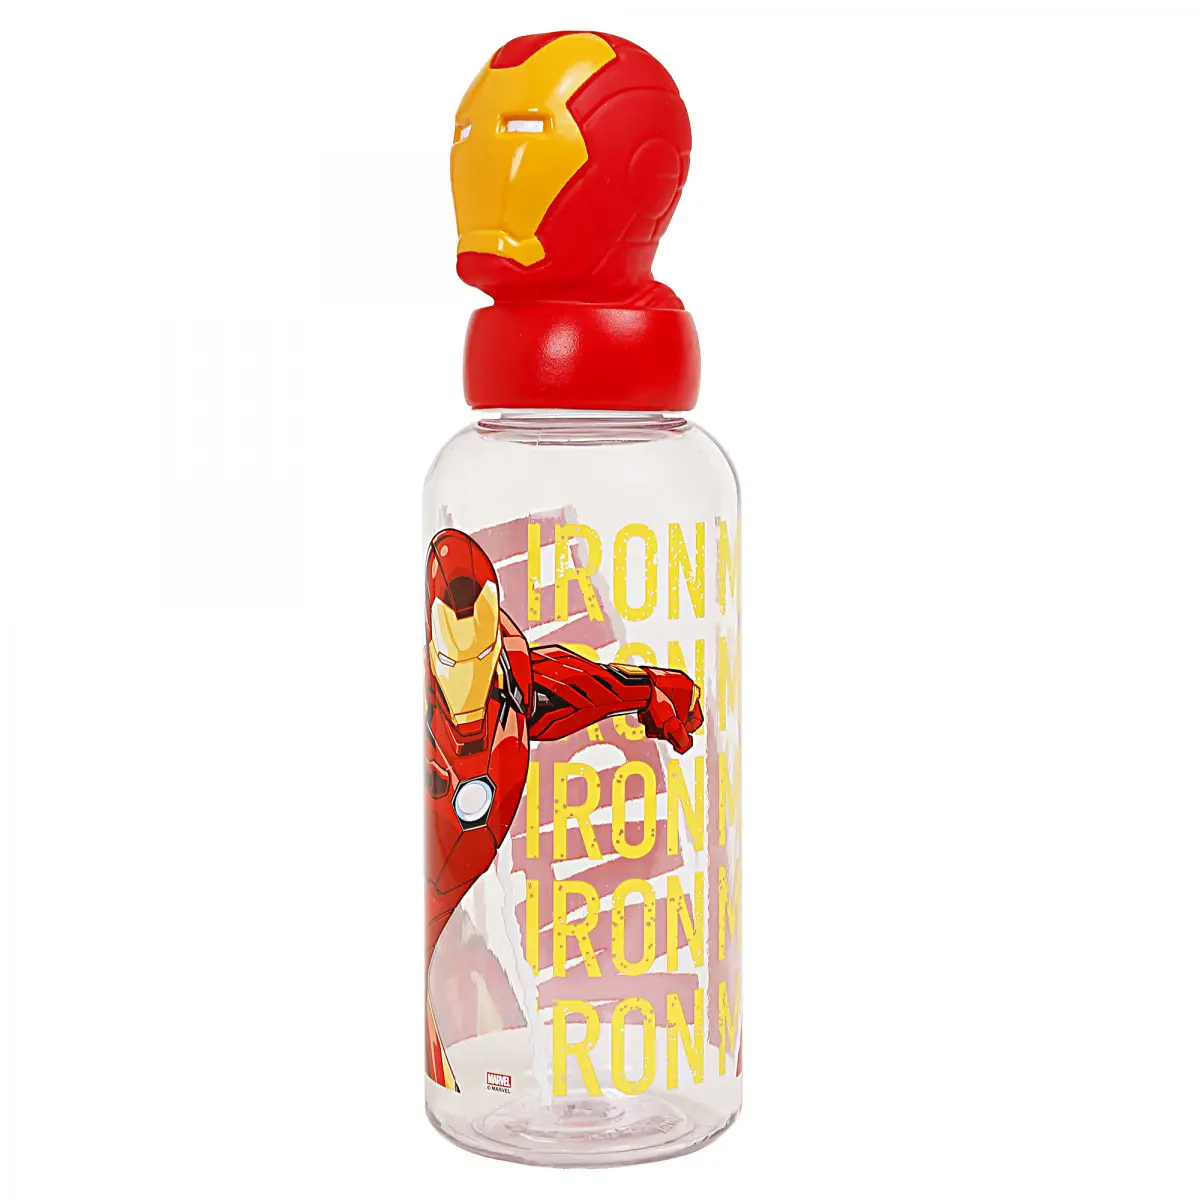 Disney Iron Man Stor 3D Figurine Water Bottle, 560ml, Multicolour